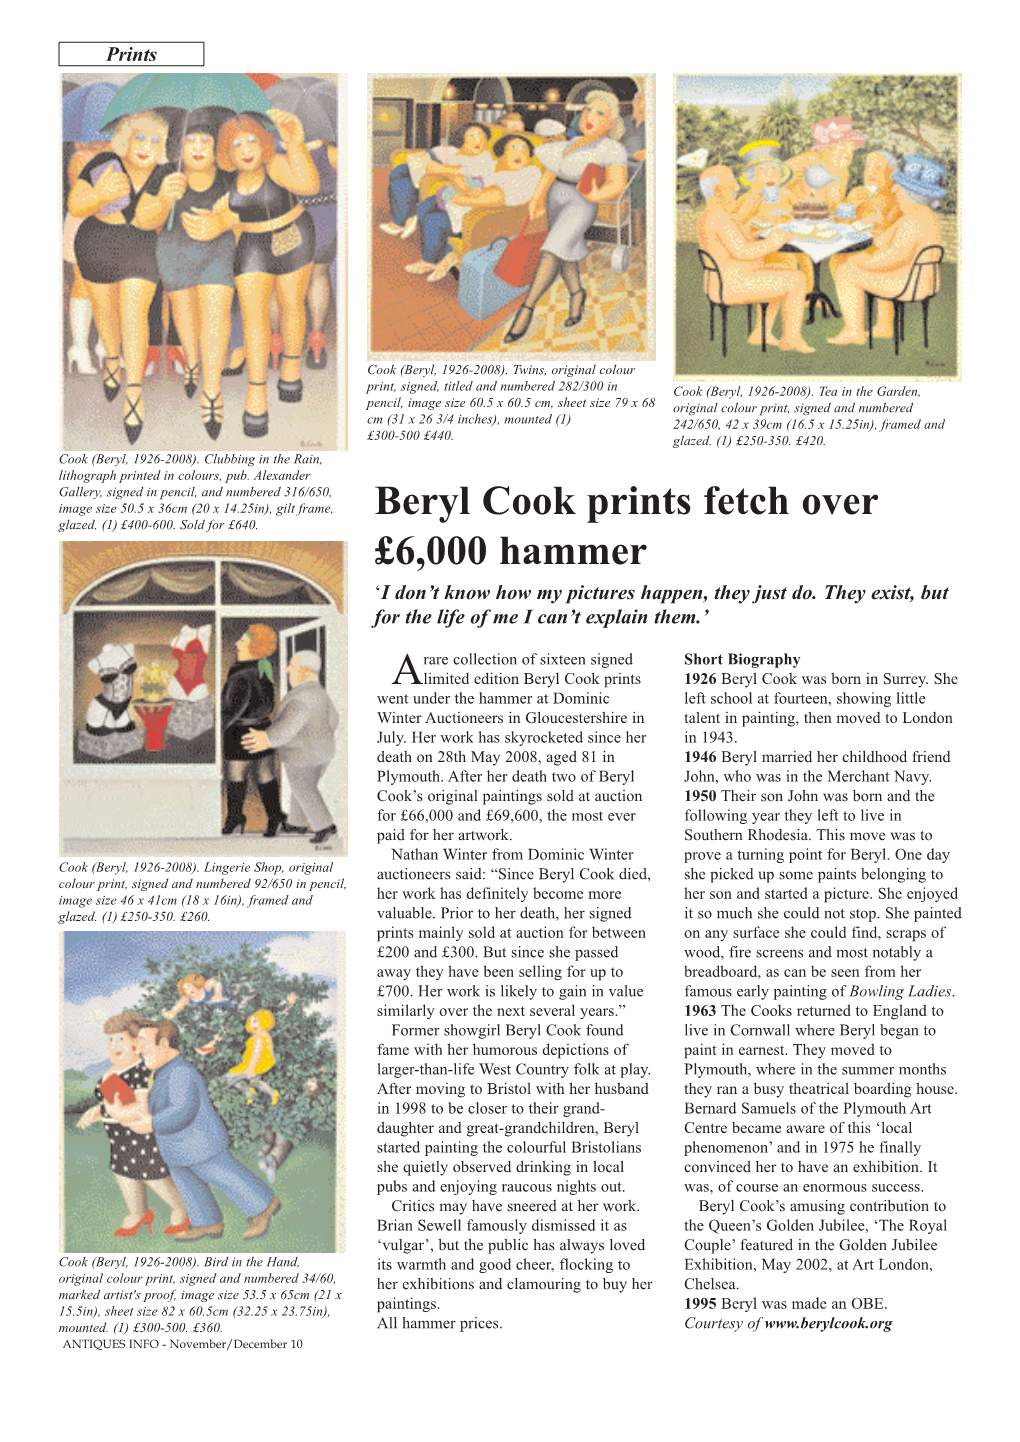 Beryl Cook Prints Fetch Over £6,000 Hammer